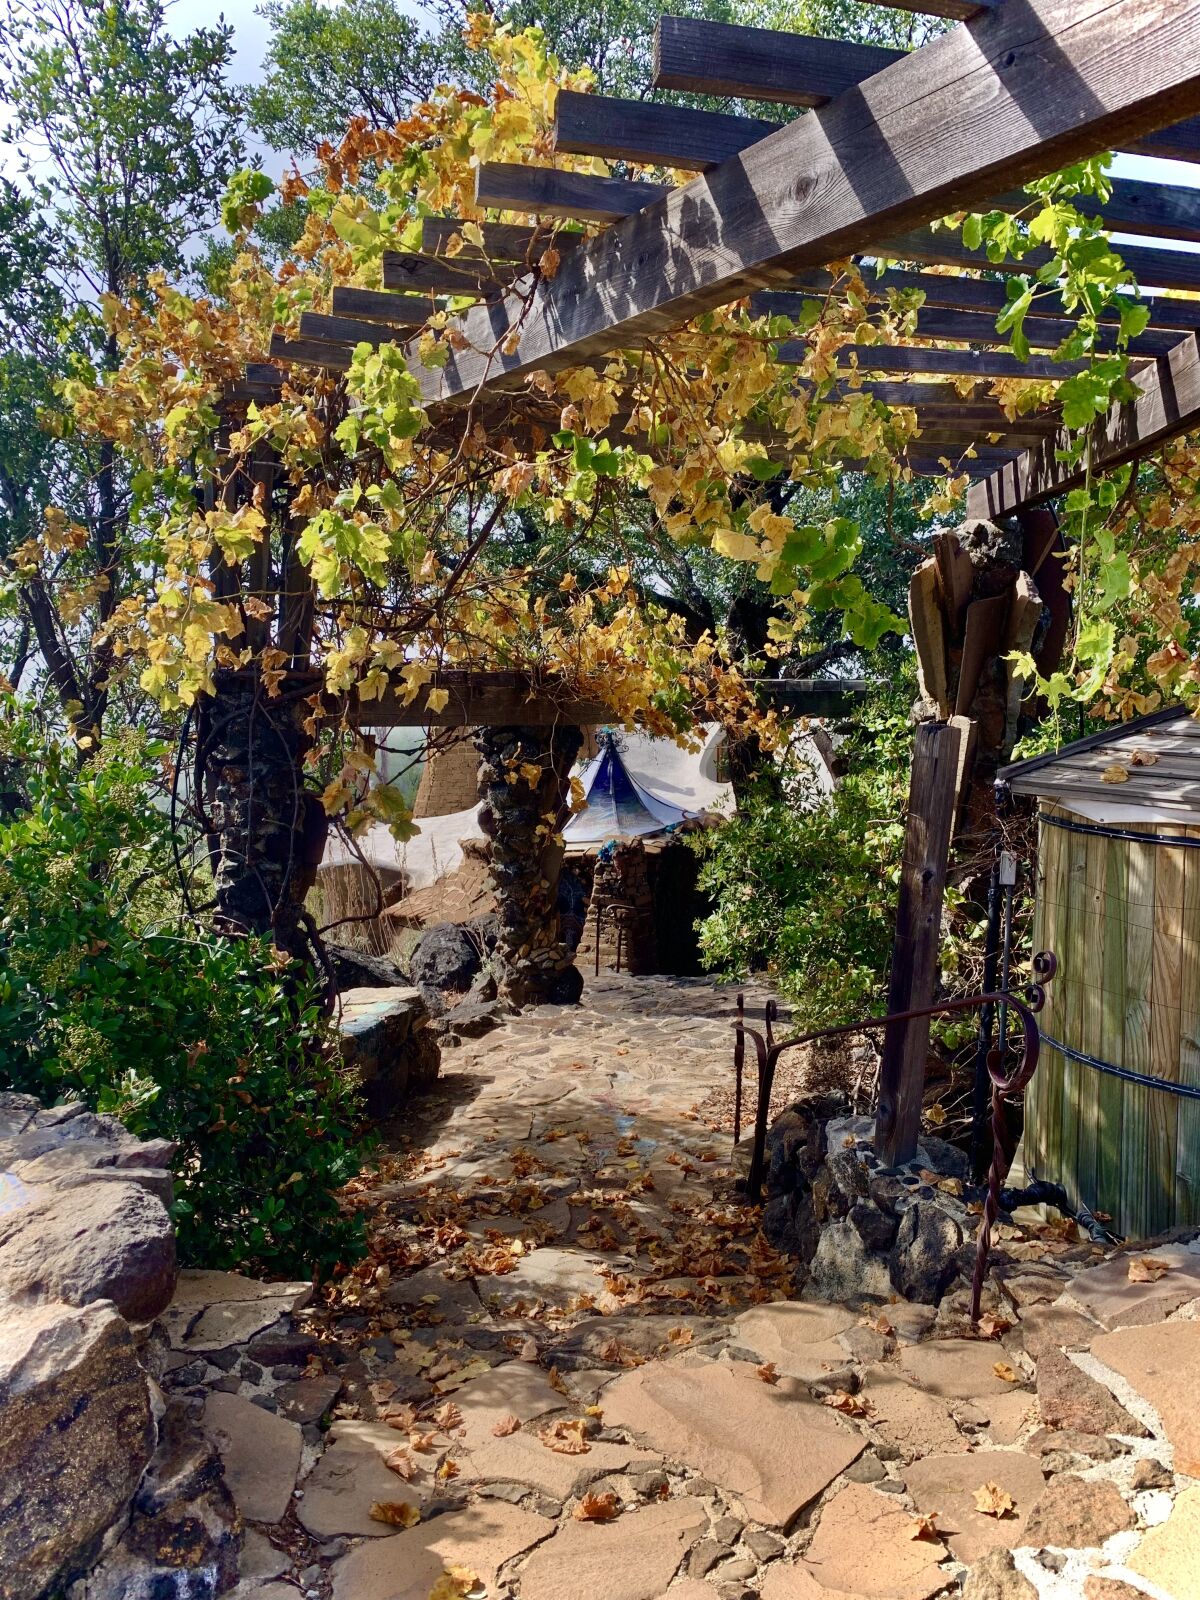 A grapevine trellis at James Hubbell's Ilan-Lael property in Santa Ysabel.